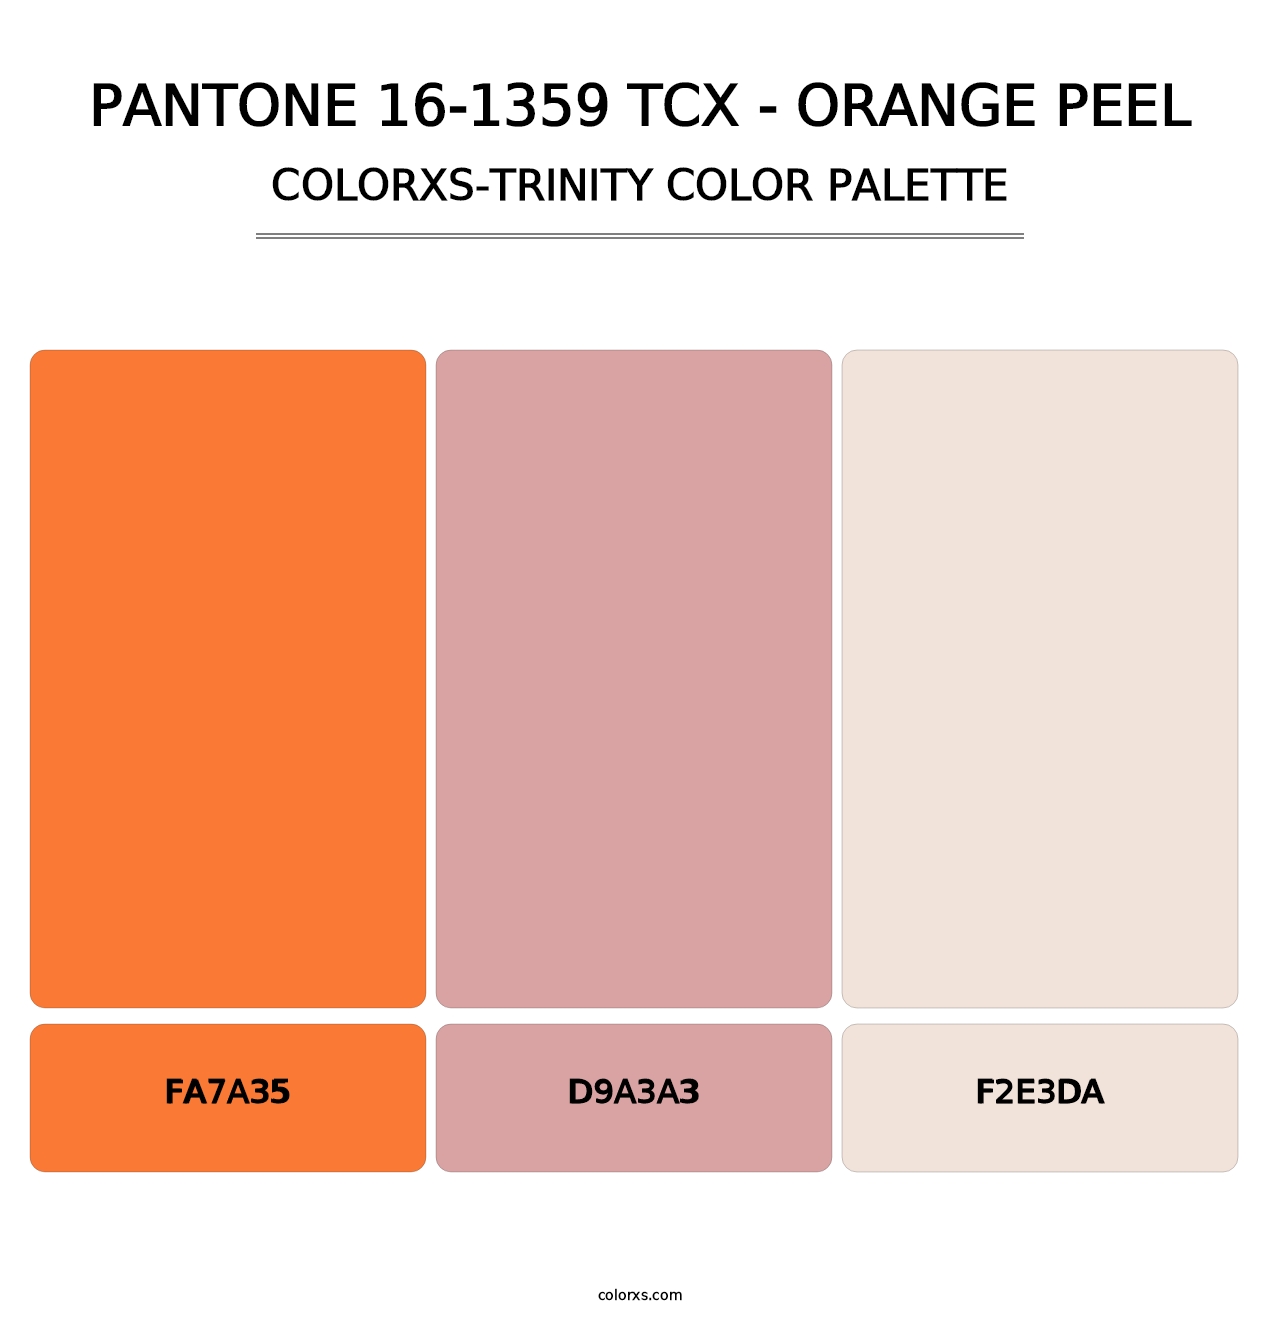 PANTONE 16-1359 TCX - Orange Peel - Colorxs Trinity Palette